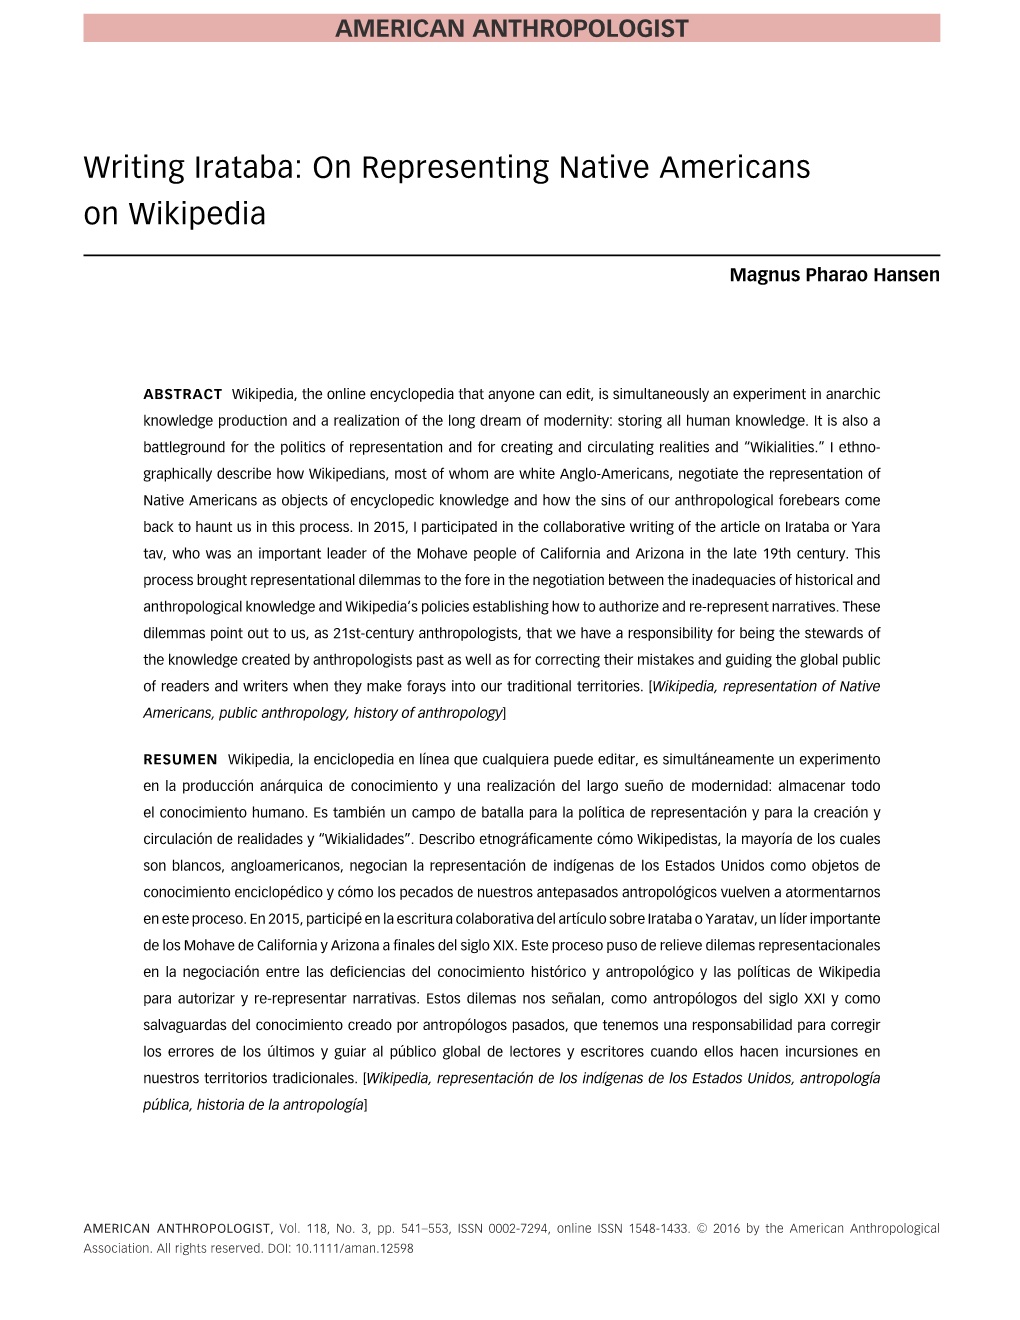 Writing Irataba: on Representing Native Americans on Wikipedia